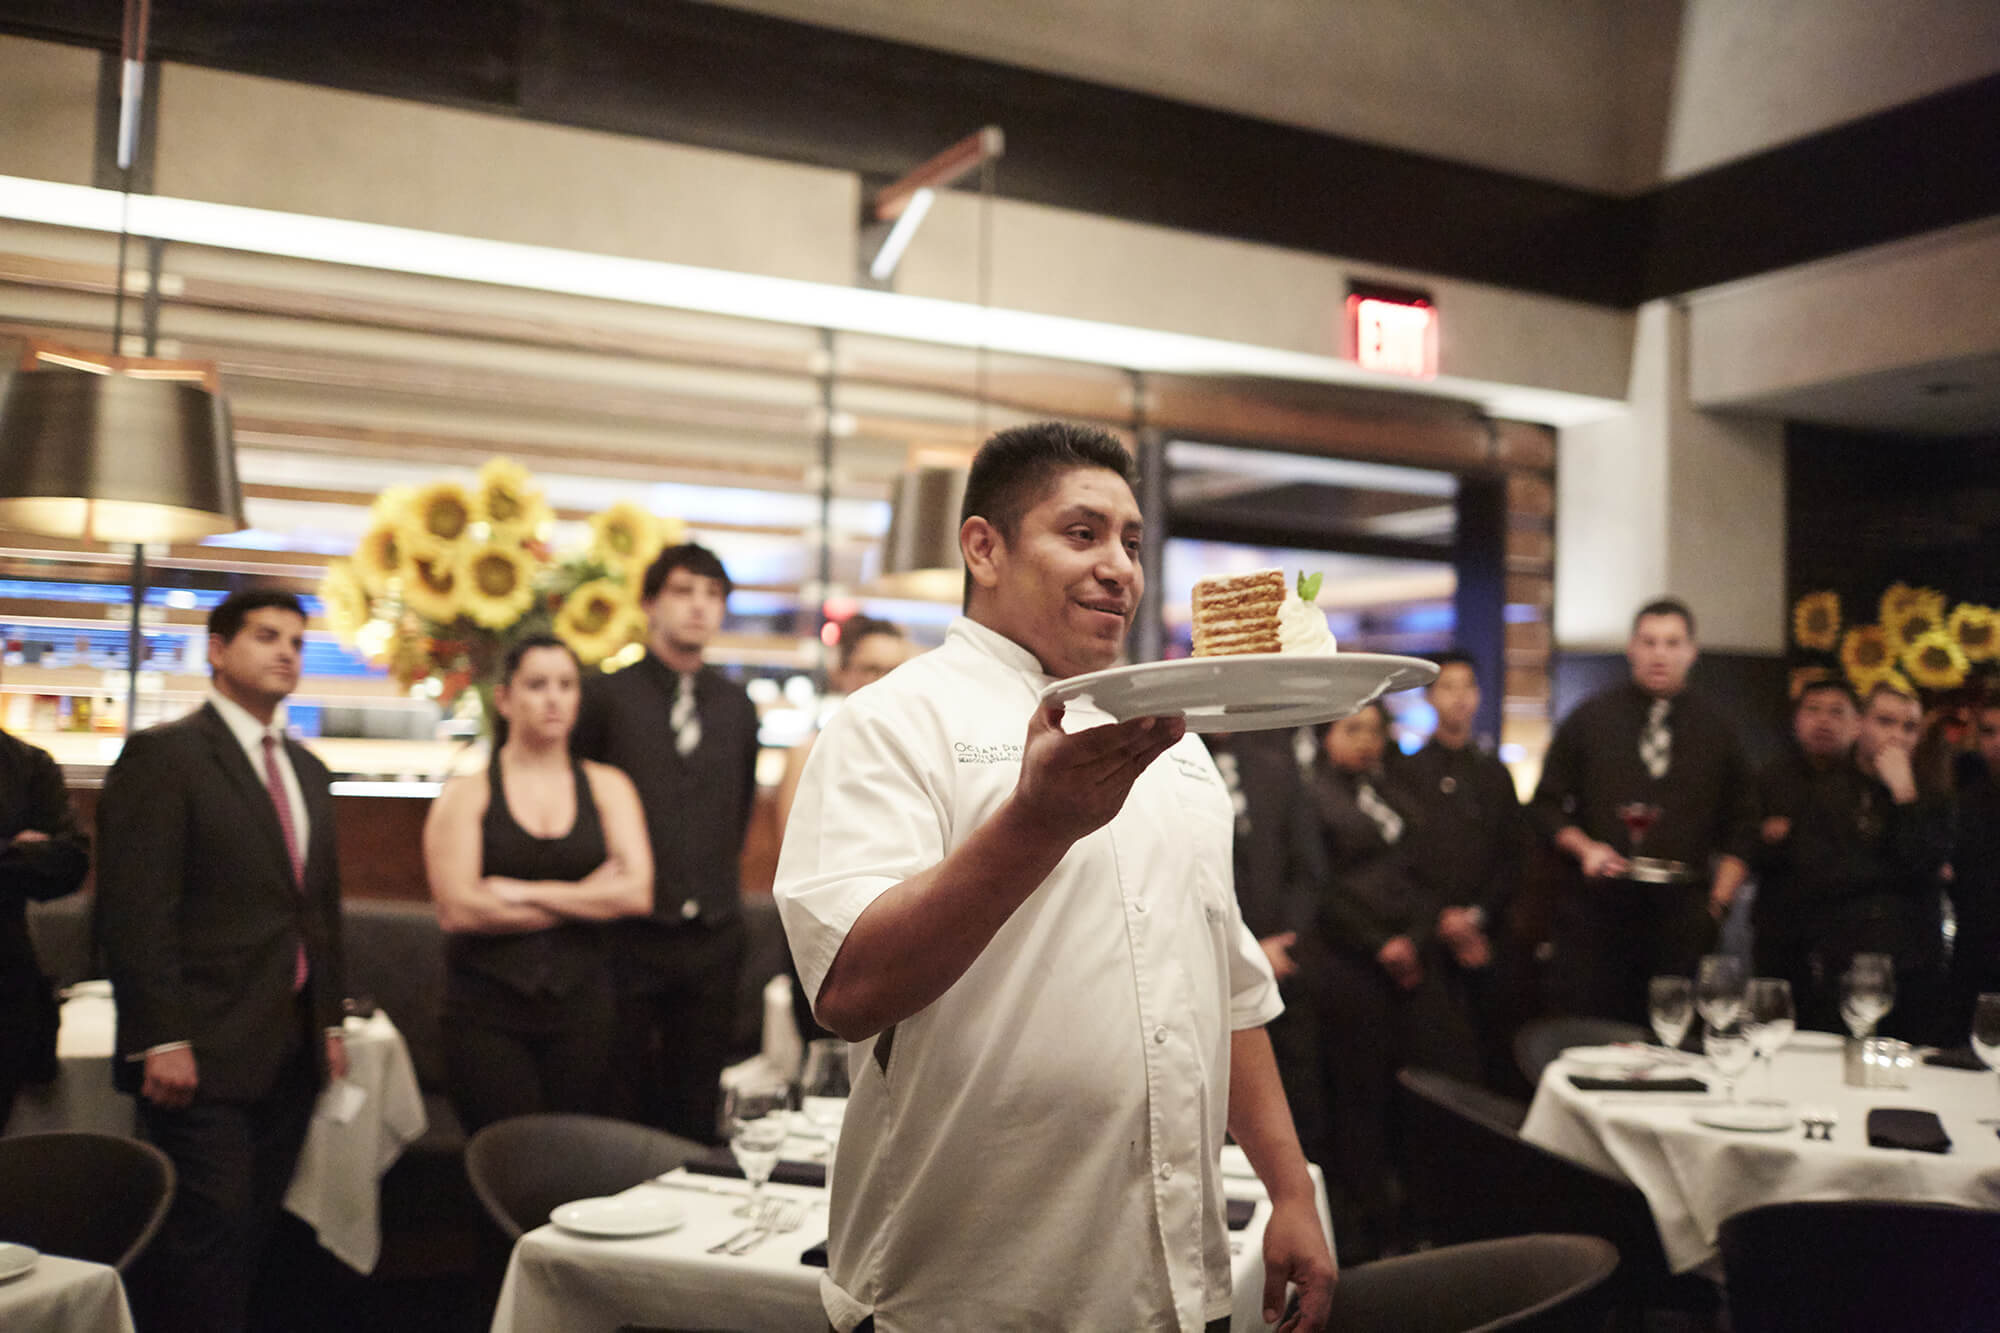 Ocean prime chef holding up a plate inside restaurant